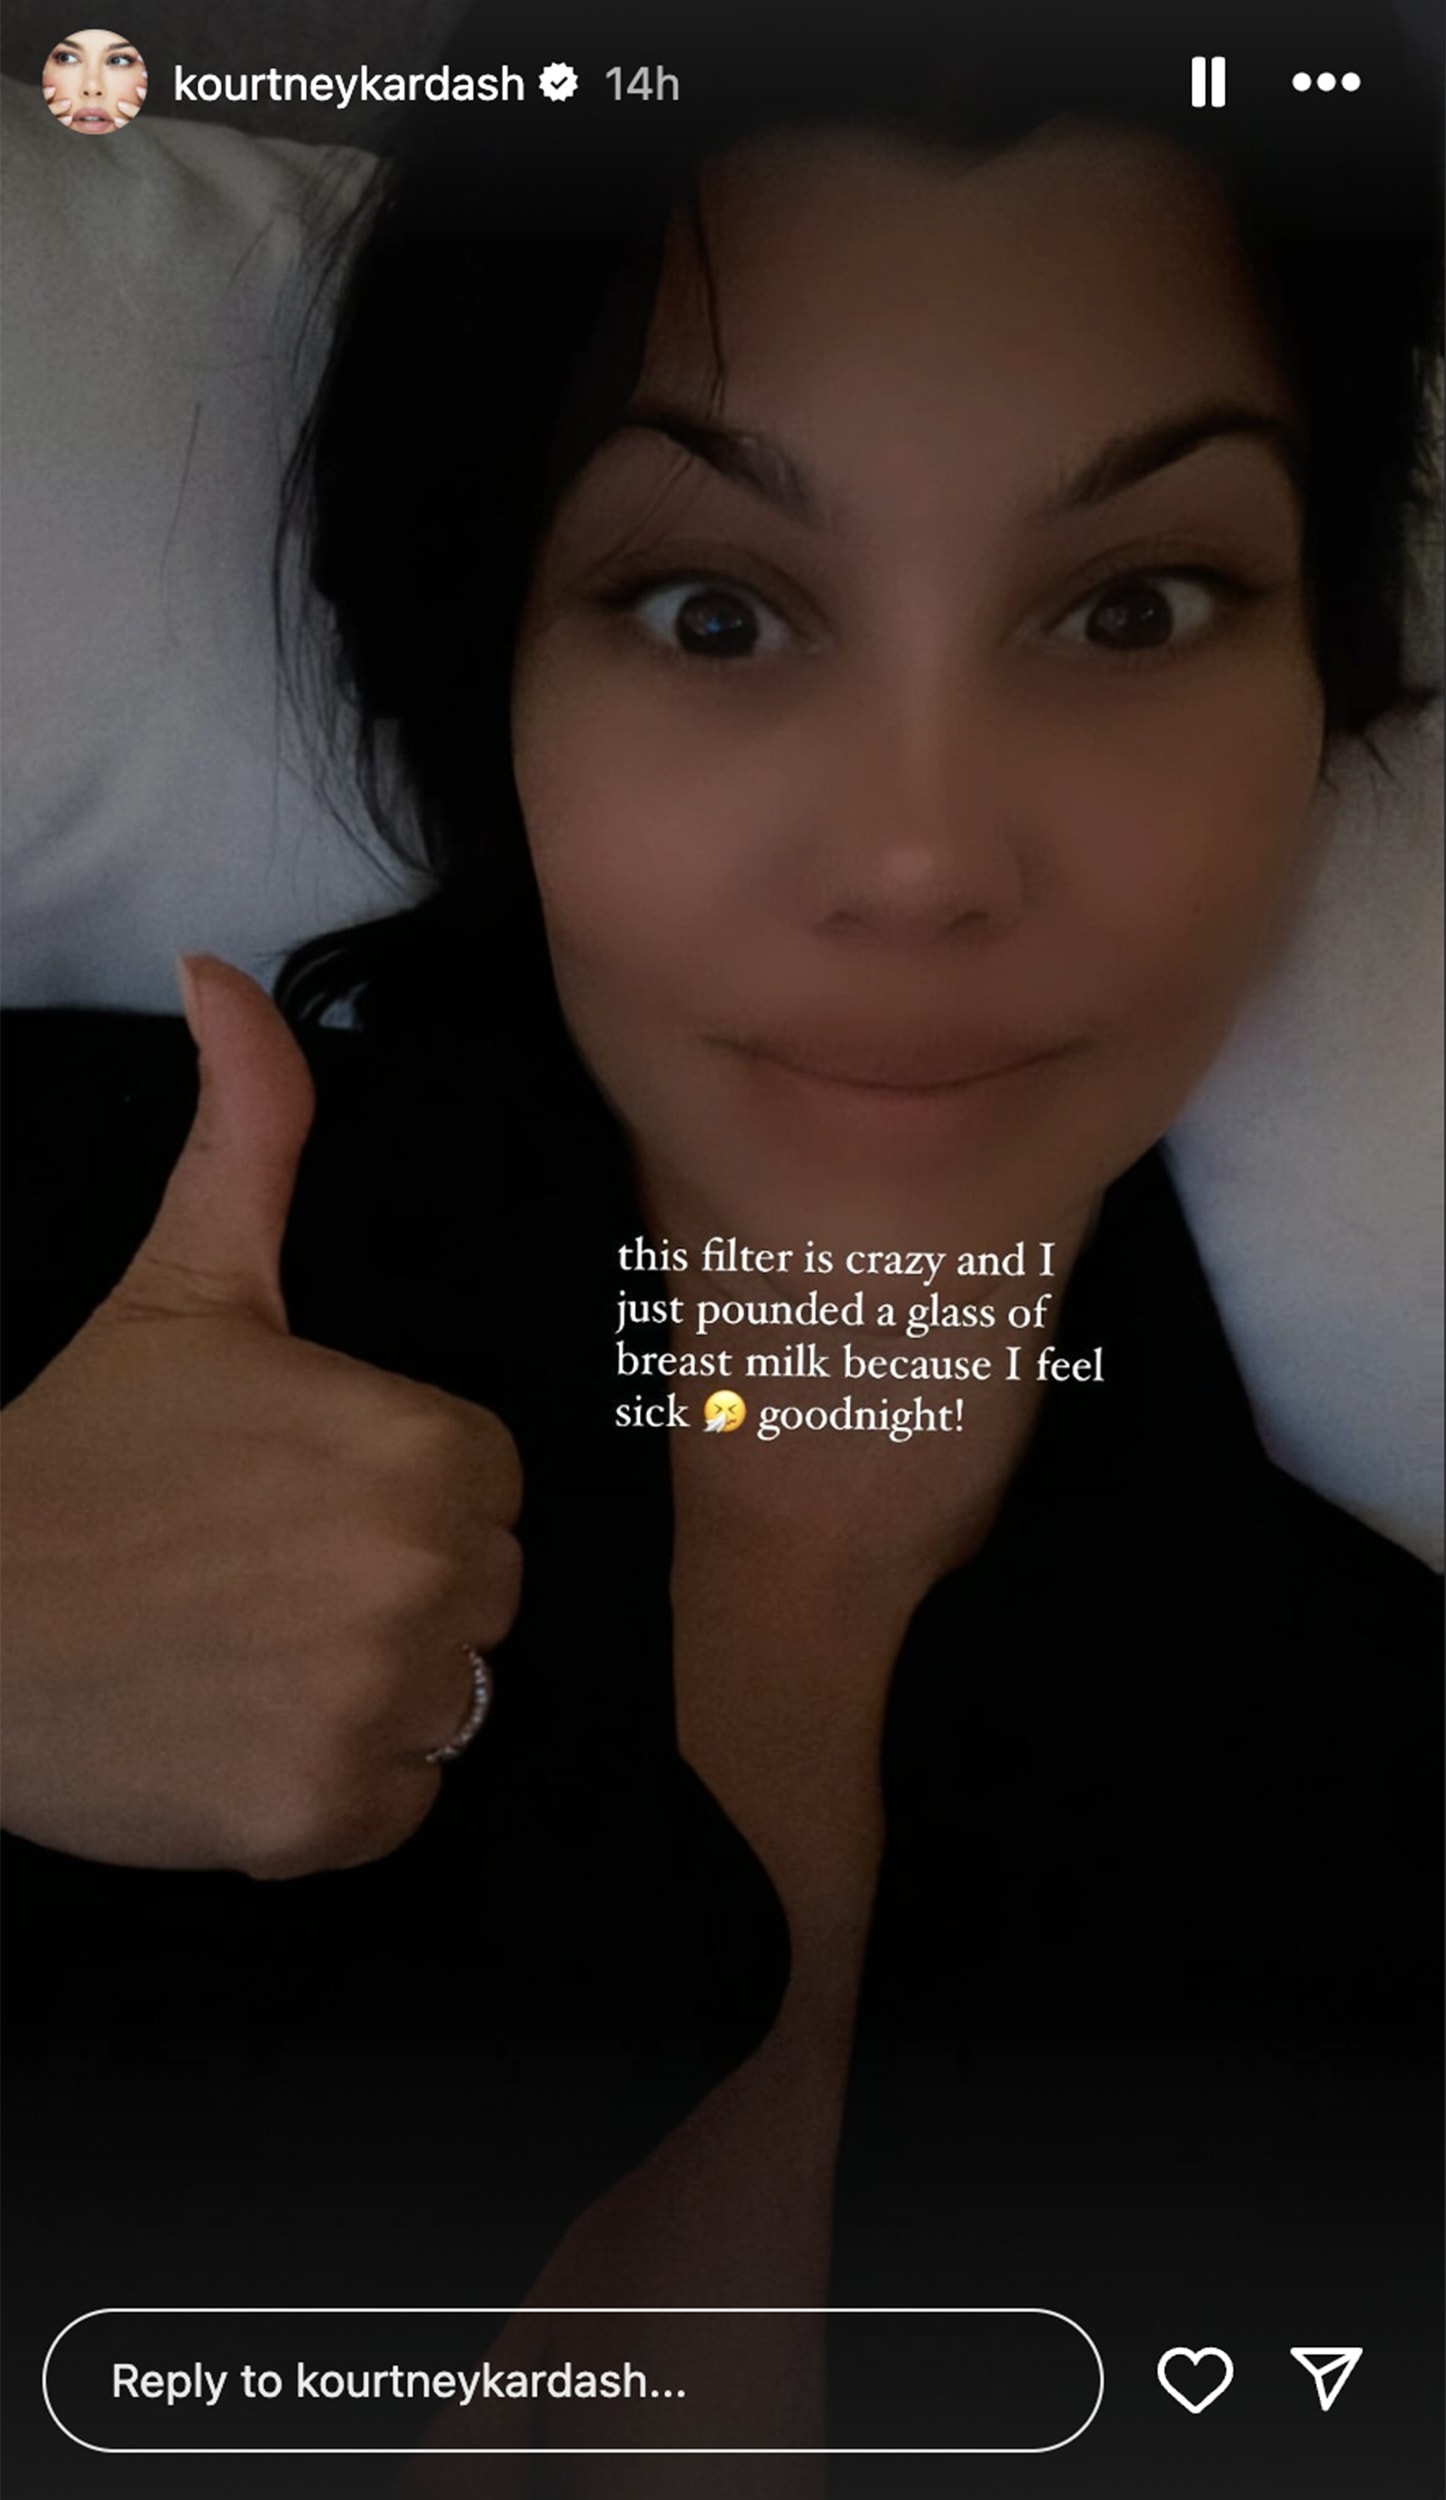 Kourtney Kardashian 'Pounded' Breast milk Because She Felt 'Sick'